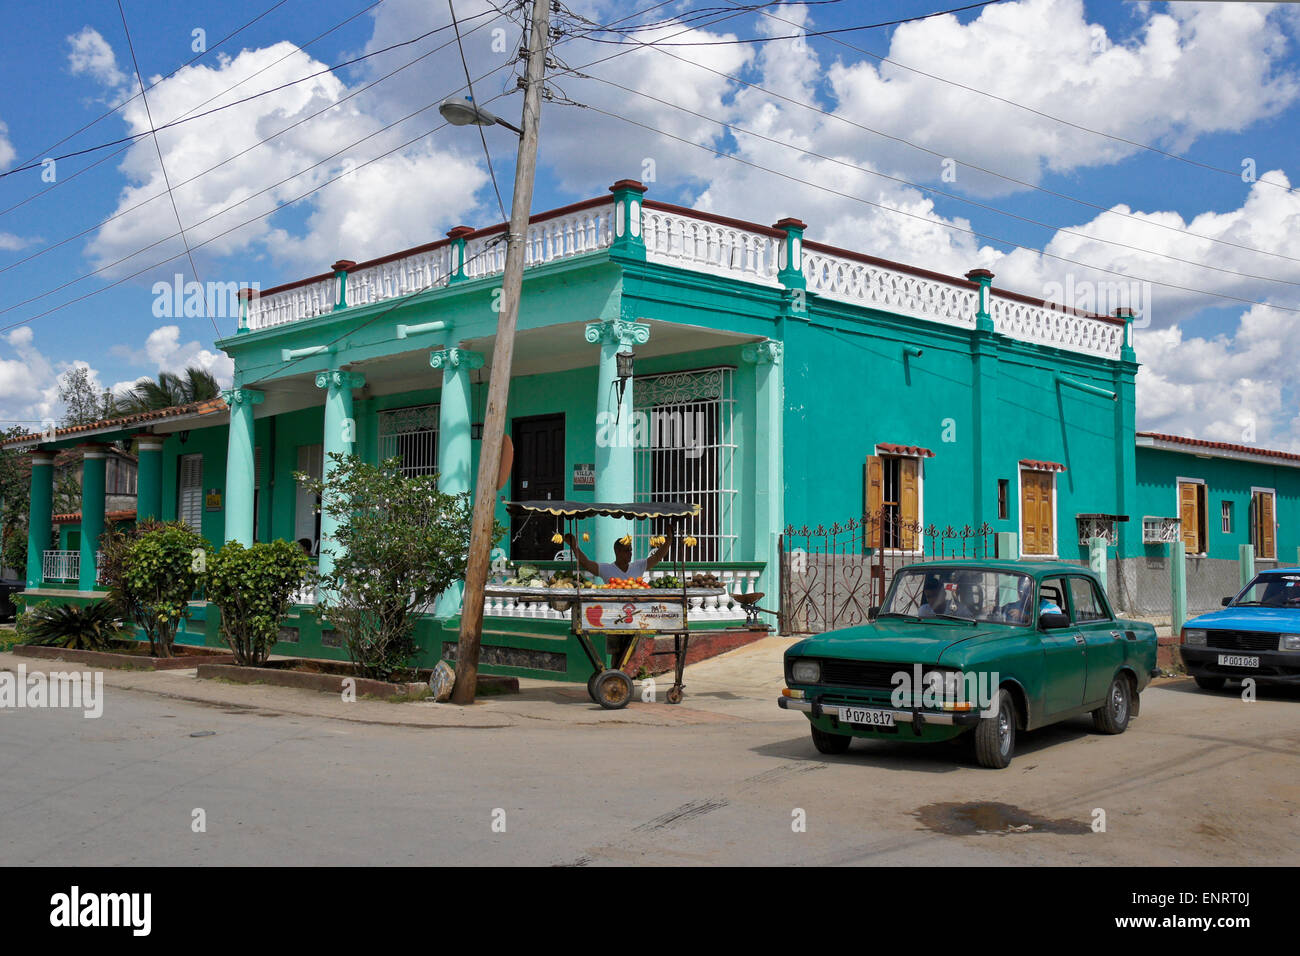 Colorful home and old Russian cars (Ladas), Viñales, Pinar del Rio province, Cuba Stock Photo